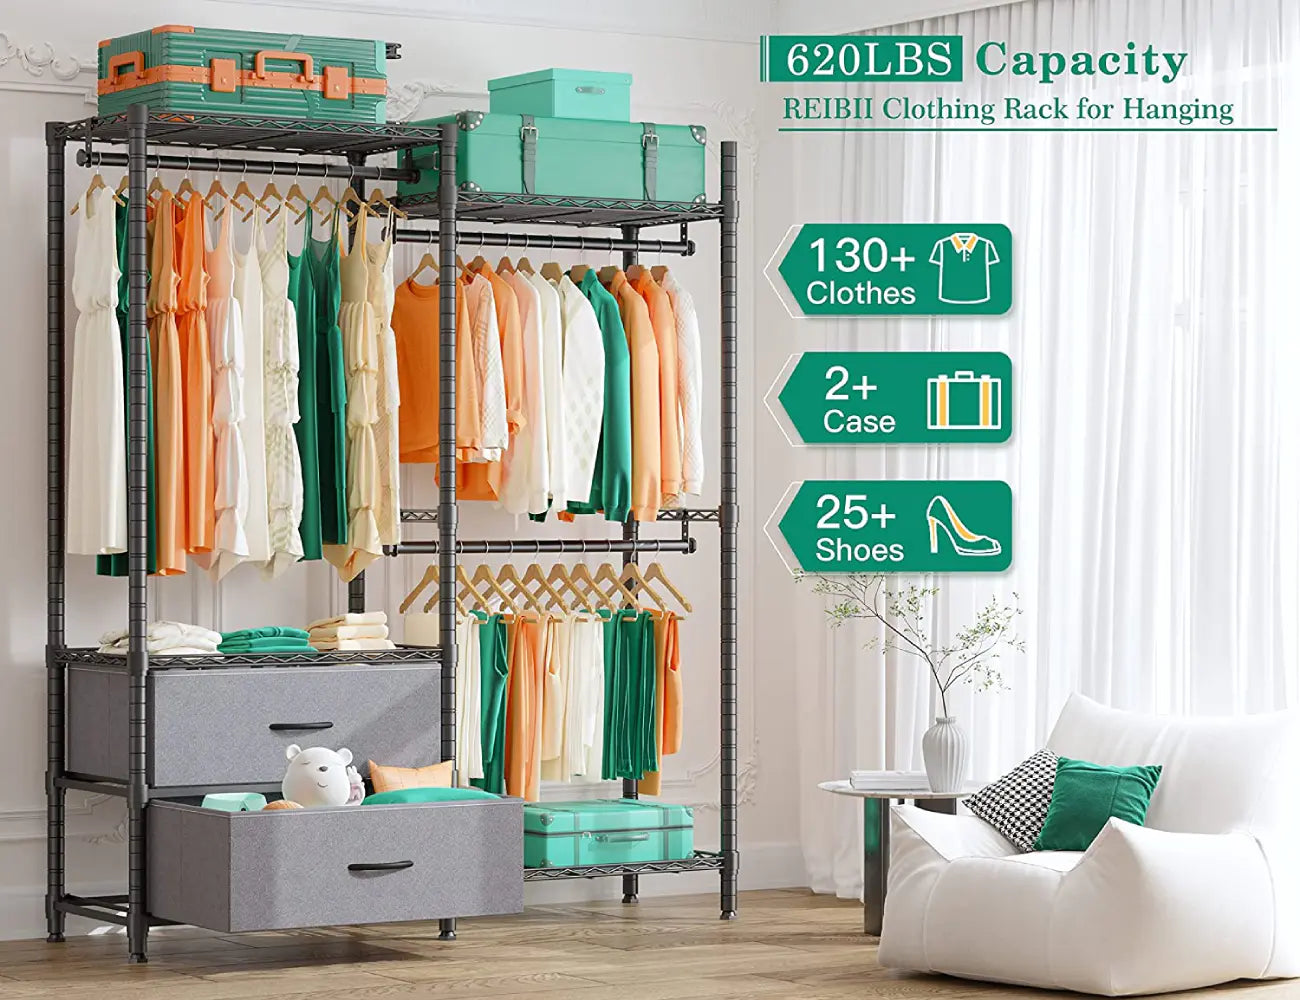 REIBII clothing rack with 620 lbs capacity 